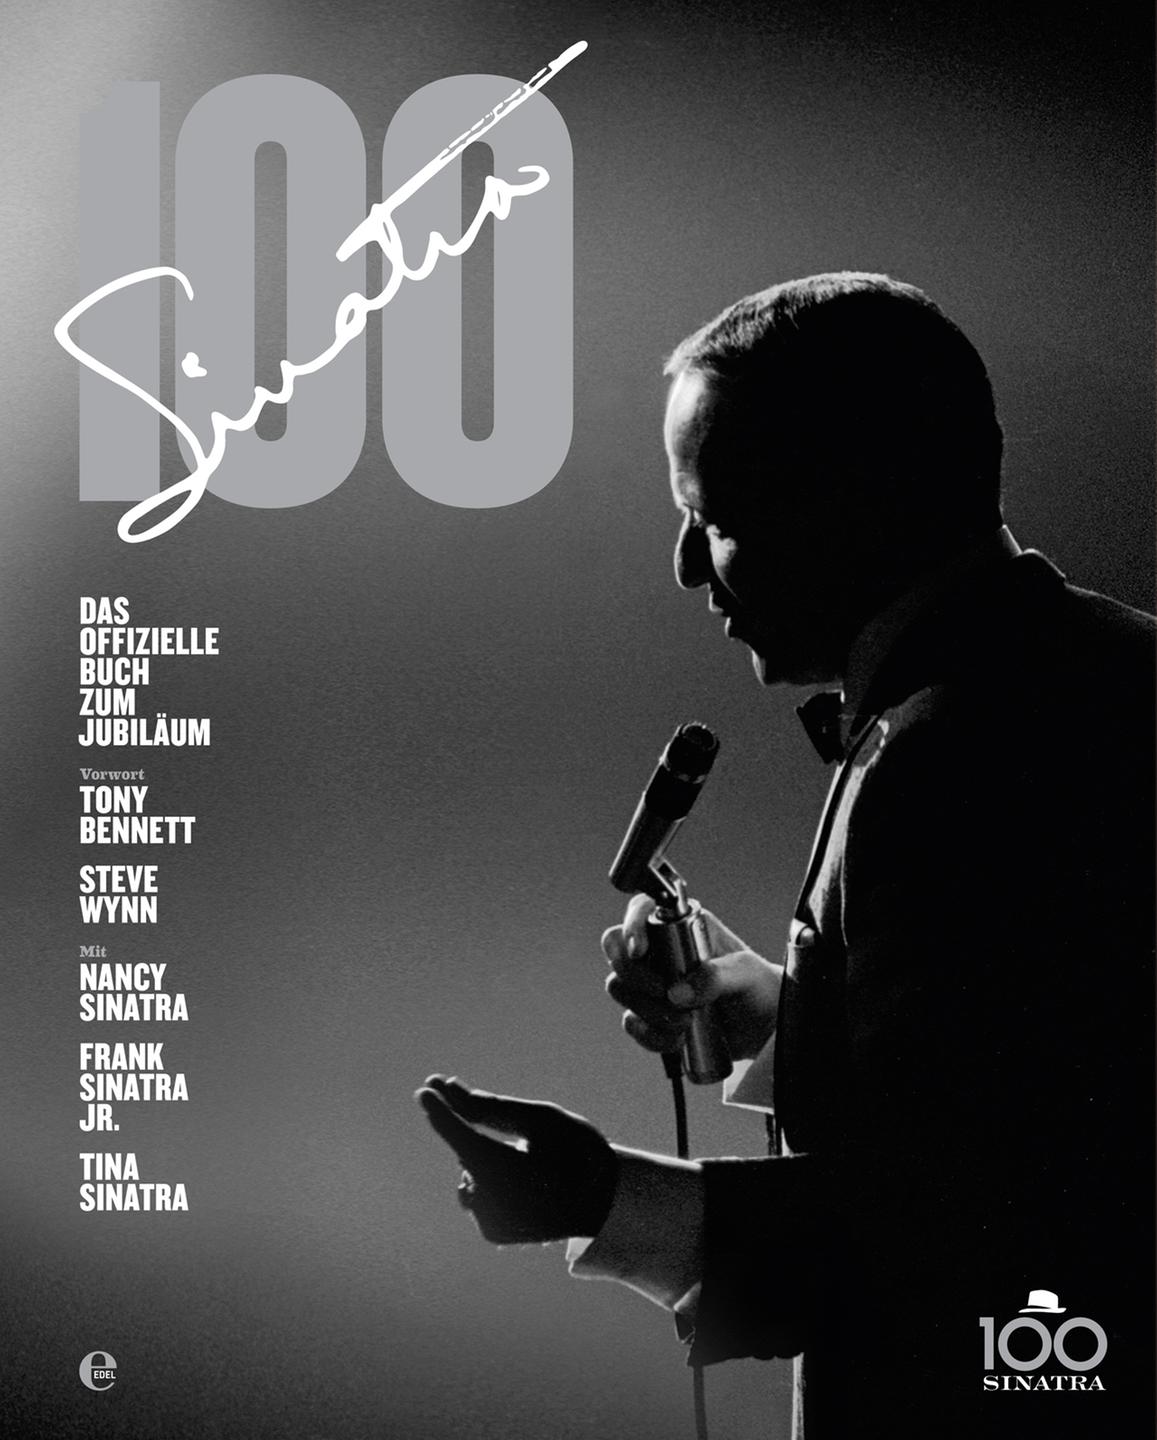 Cover des Bildbands "Sinatra 100"